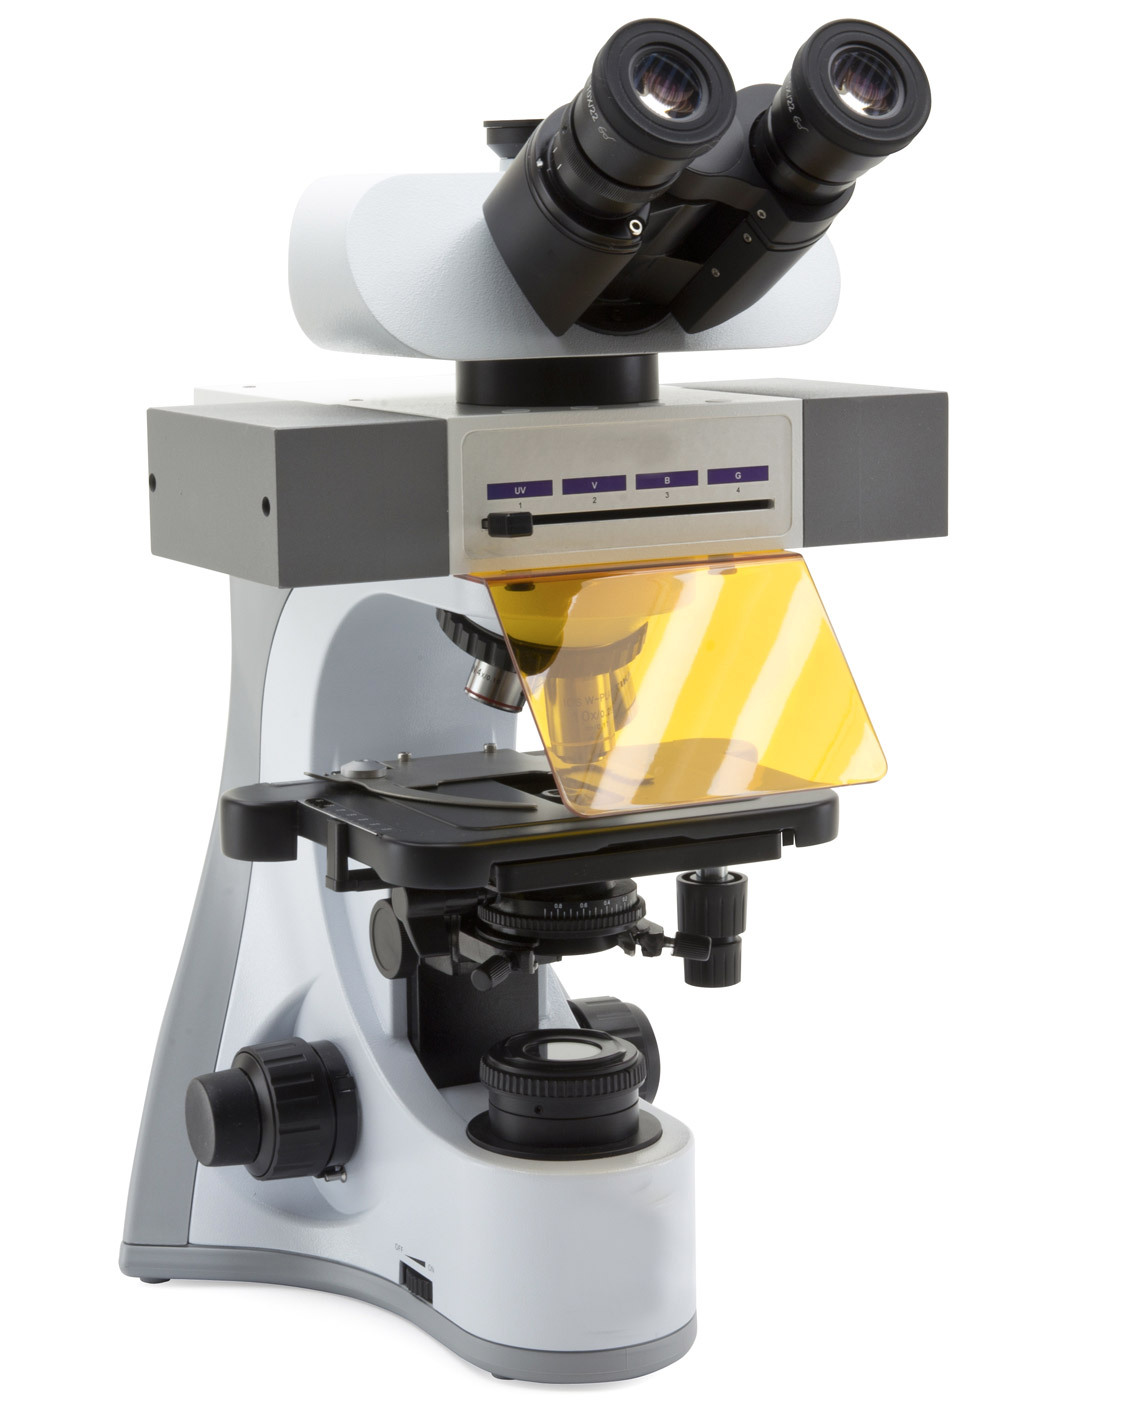 B-510LD4 - Trinokulrn laboratorn mikroskop